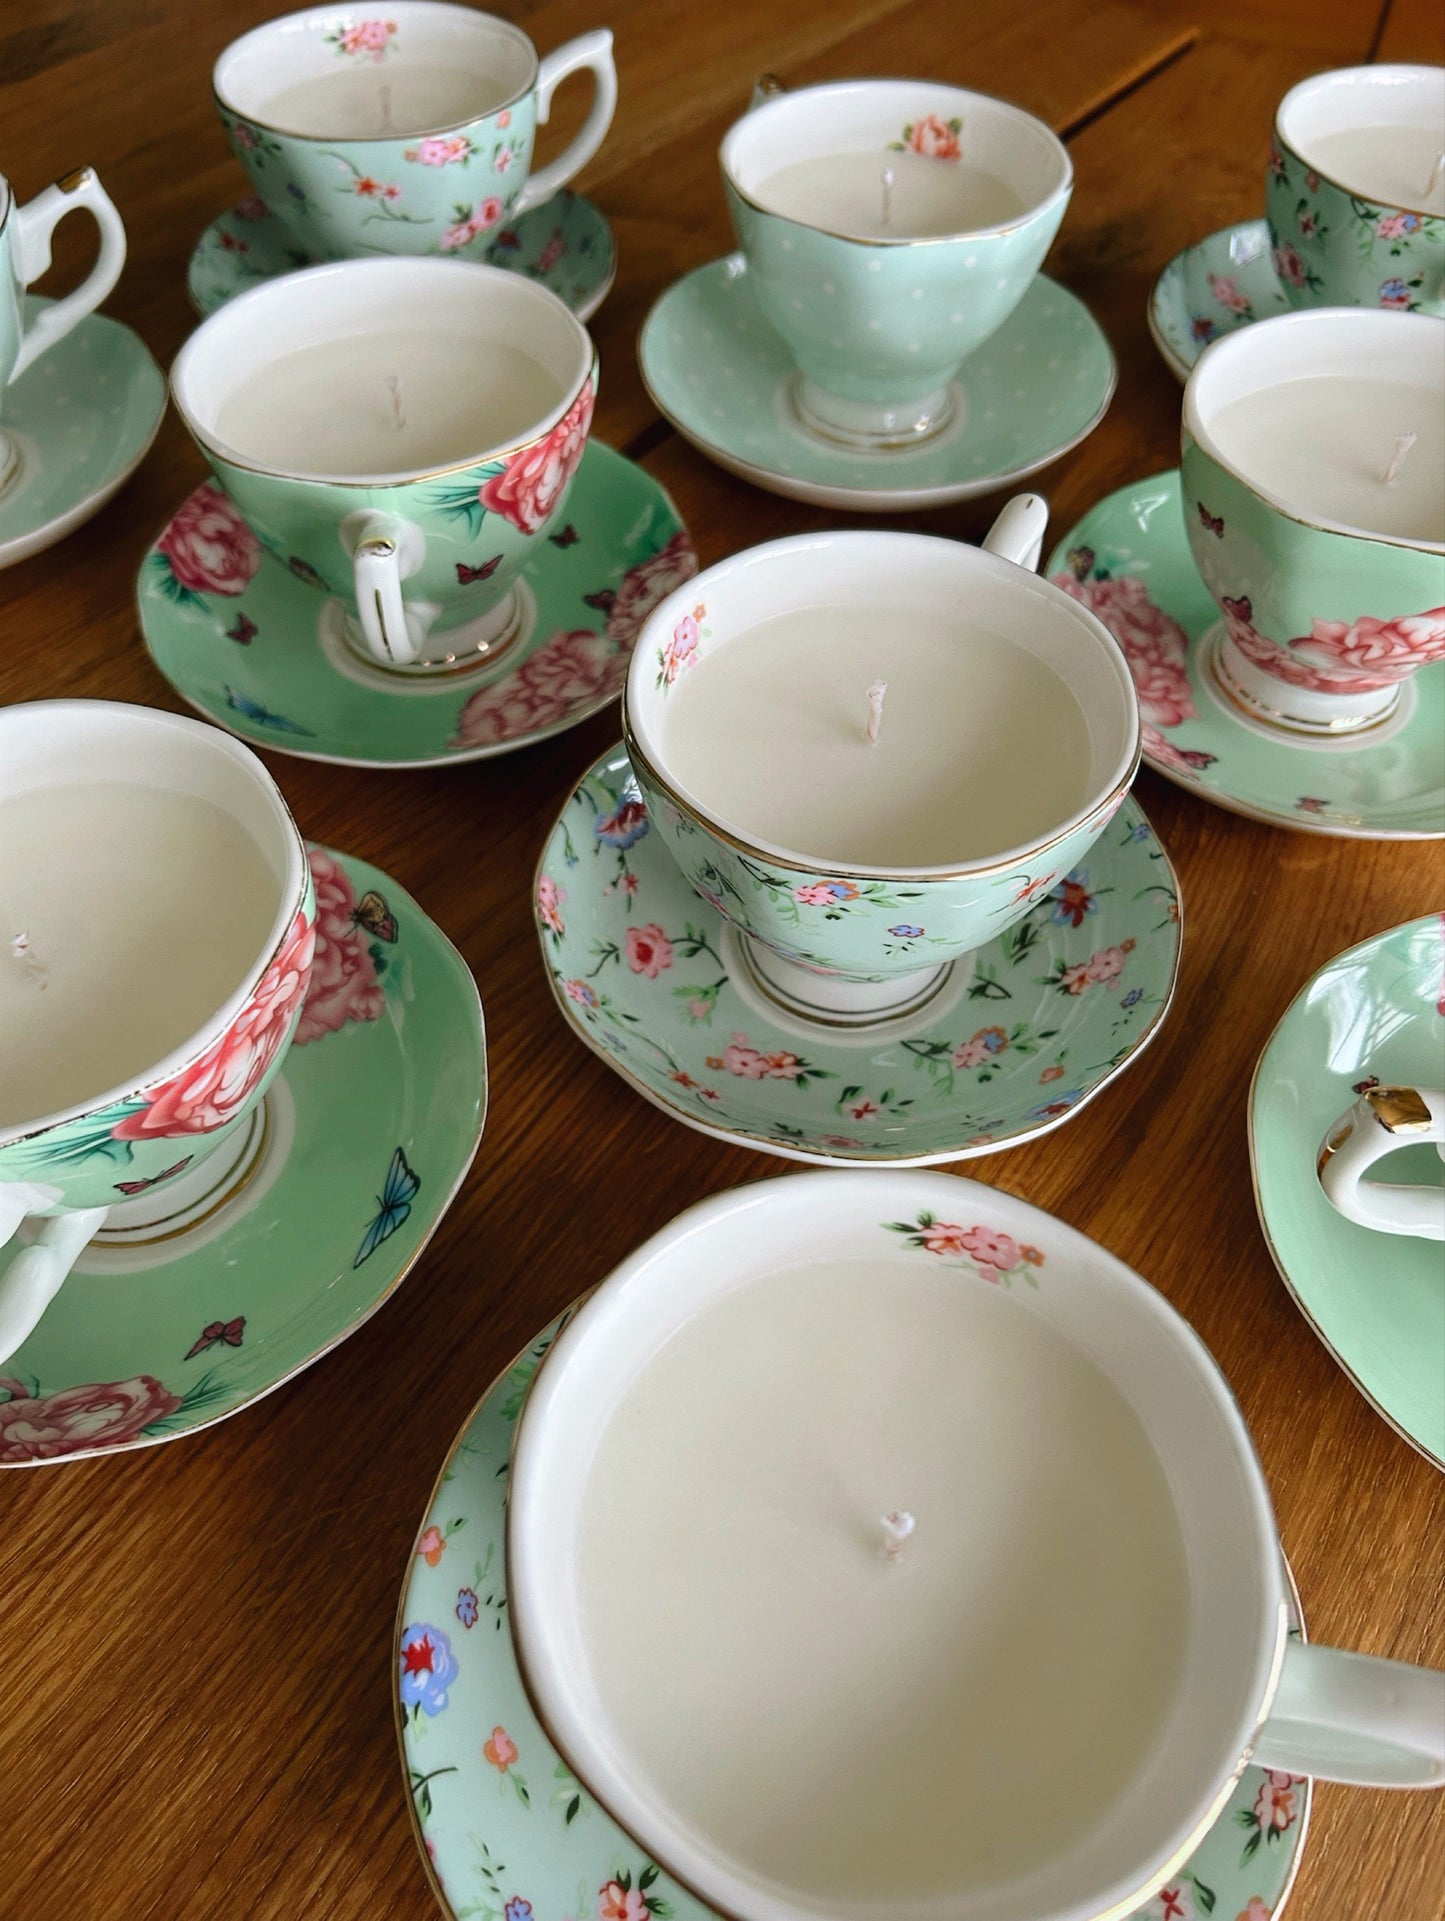 Porcelain Soywax Teacup Candles